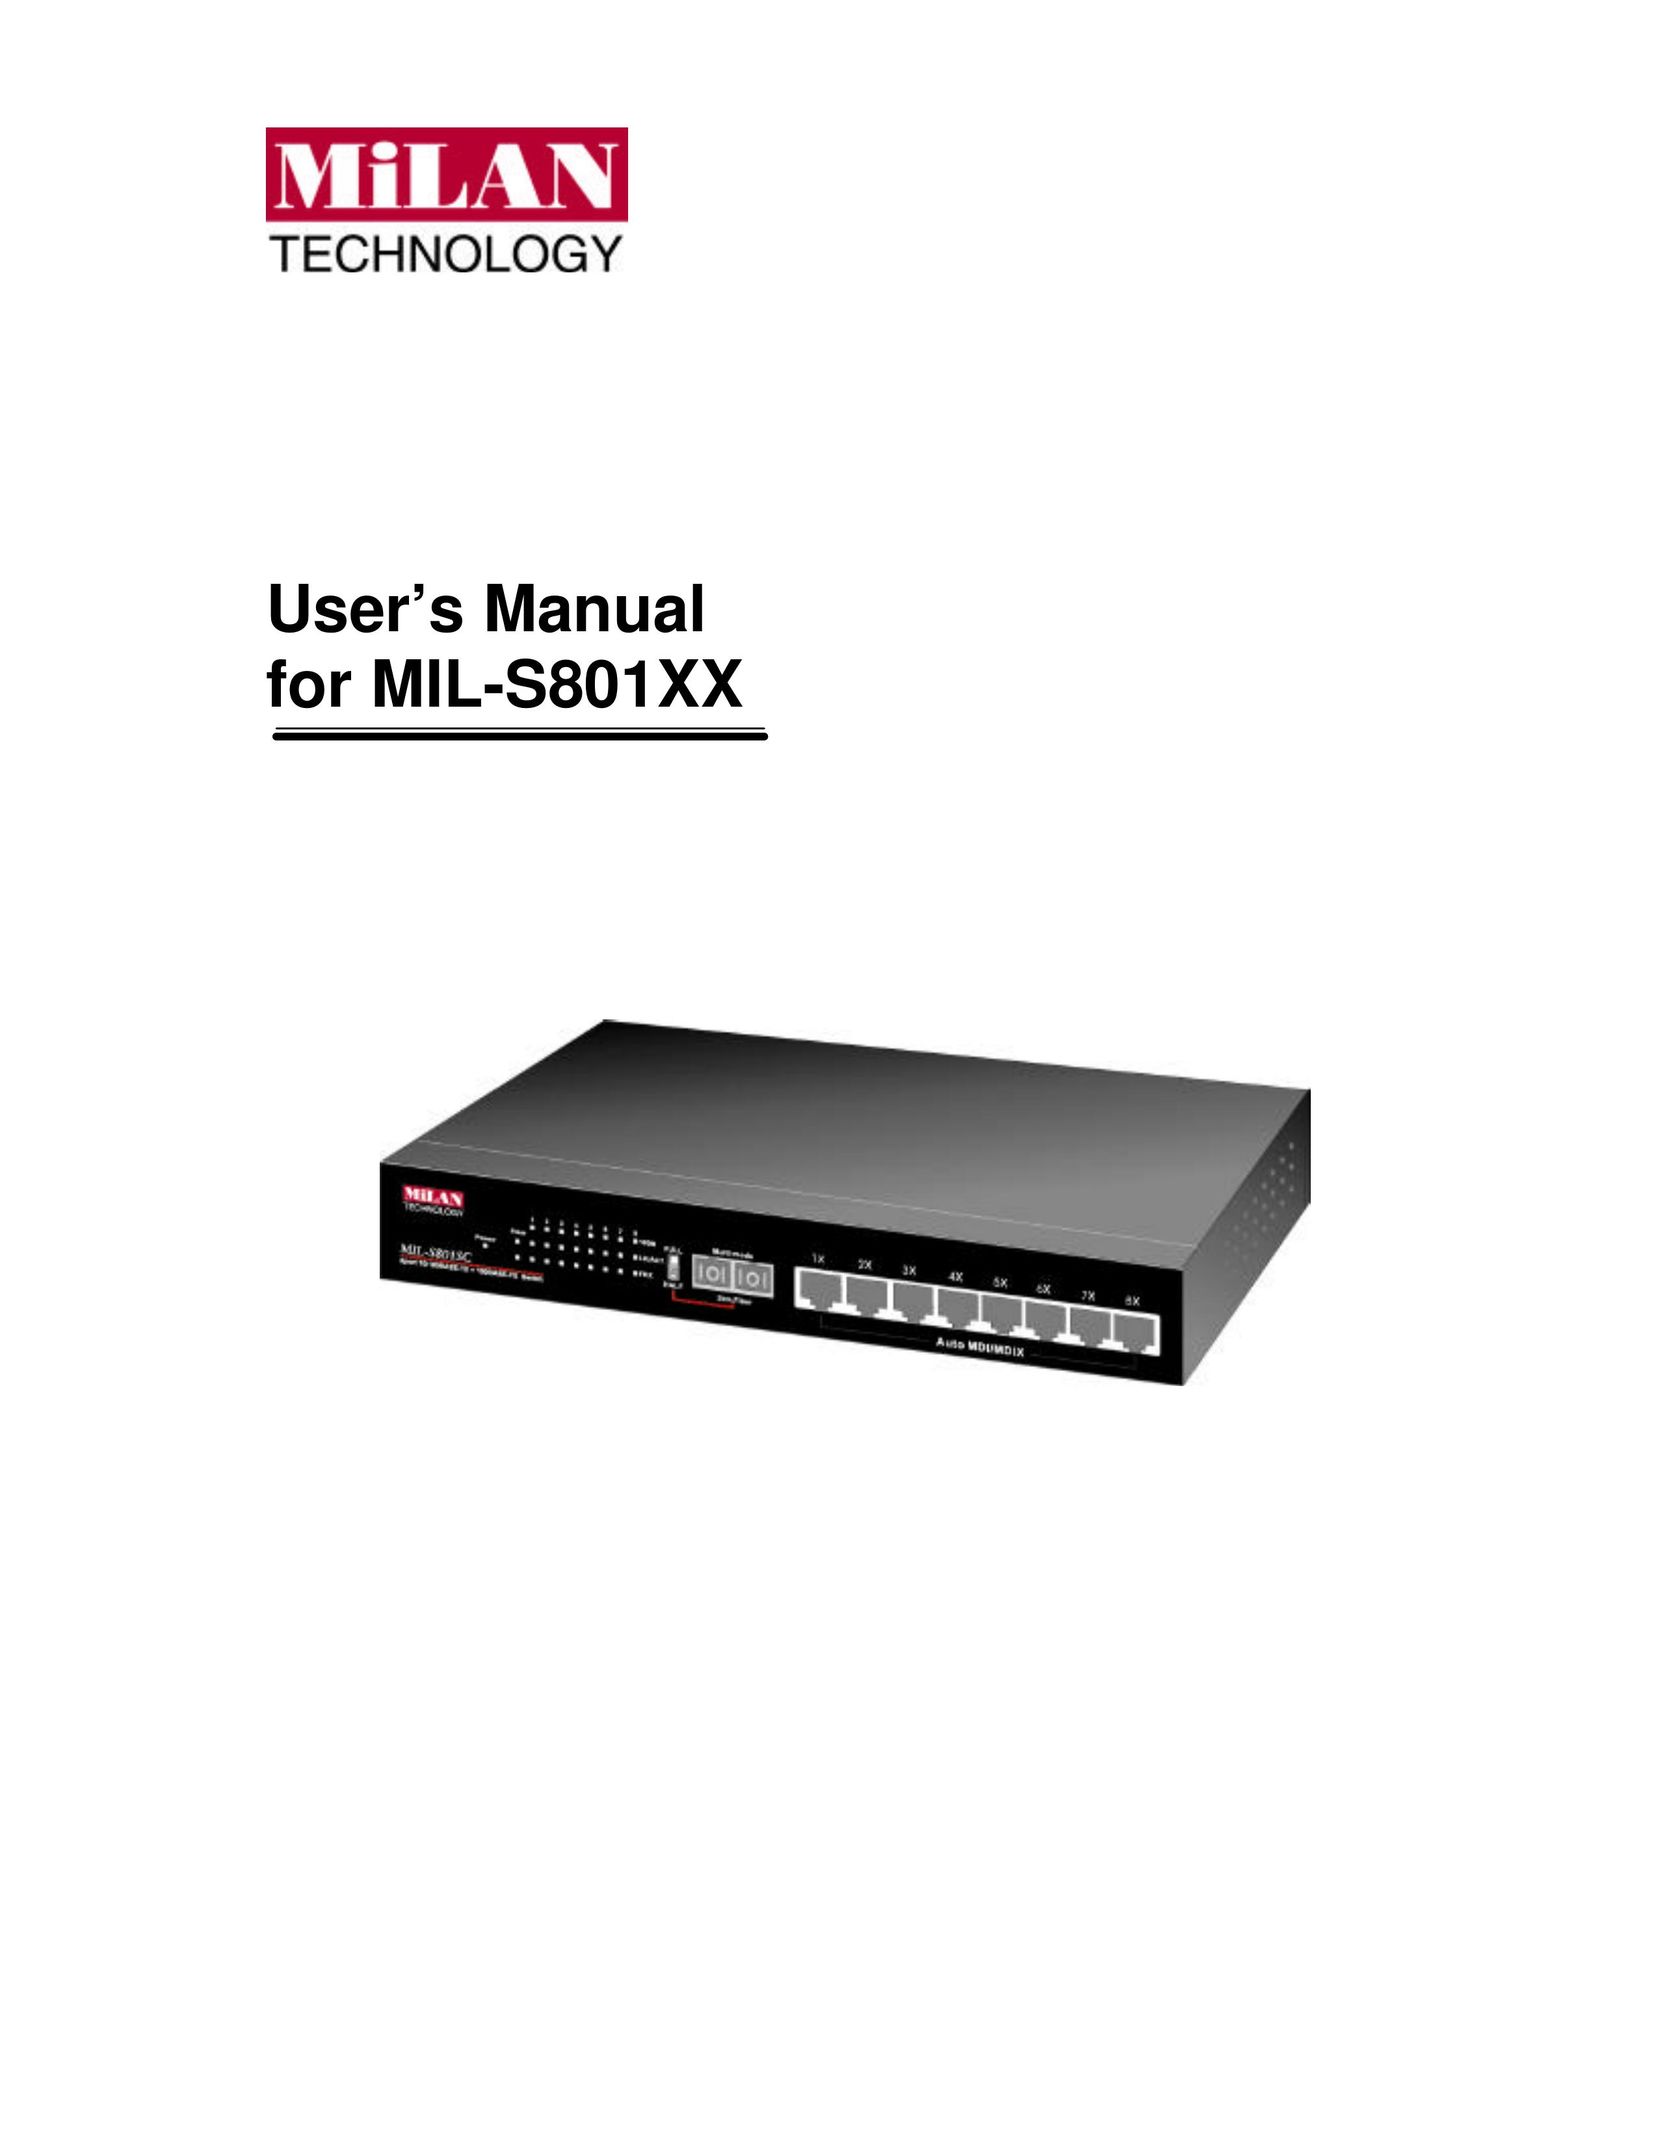 Milan Technology MIL-S801XX Switch User Manual